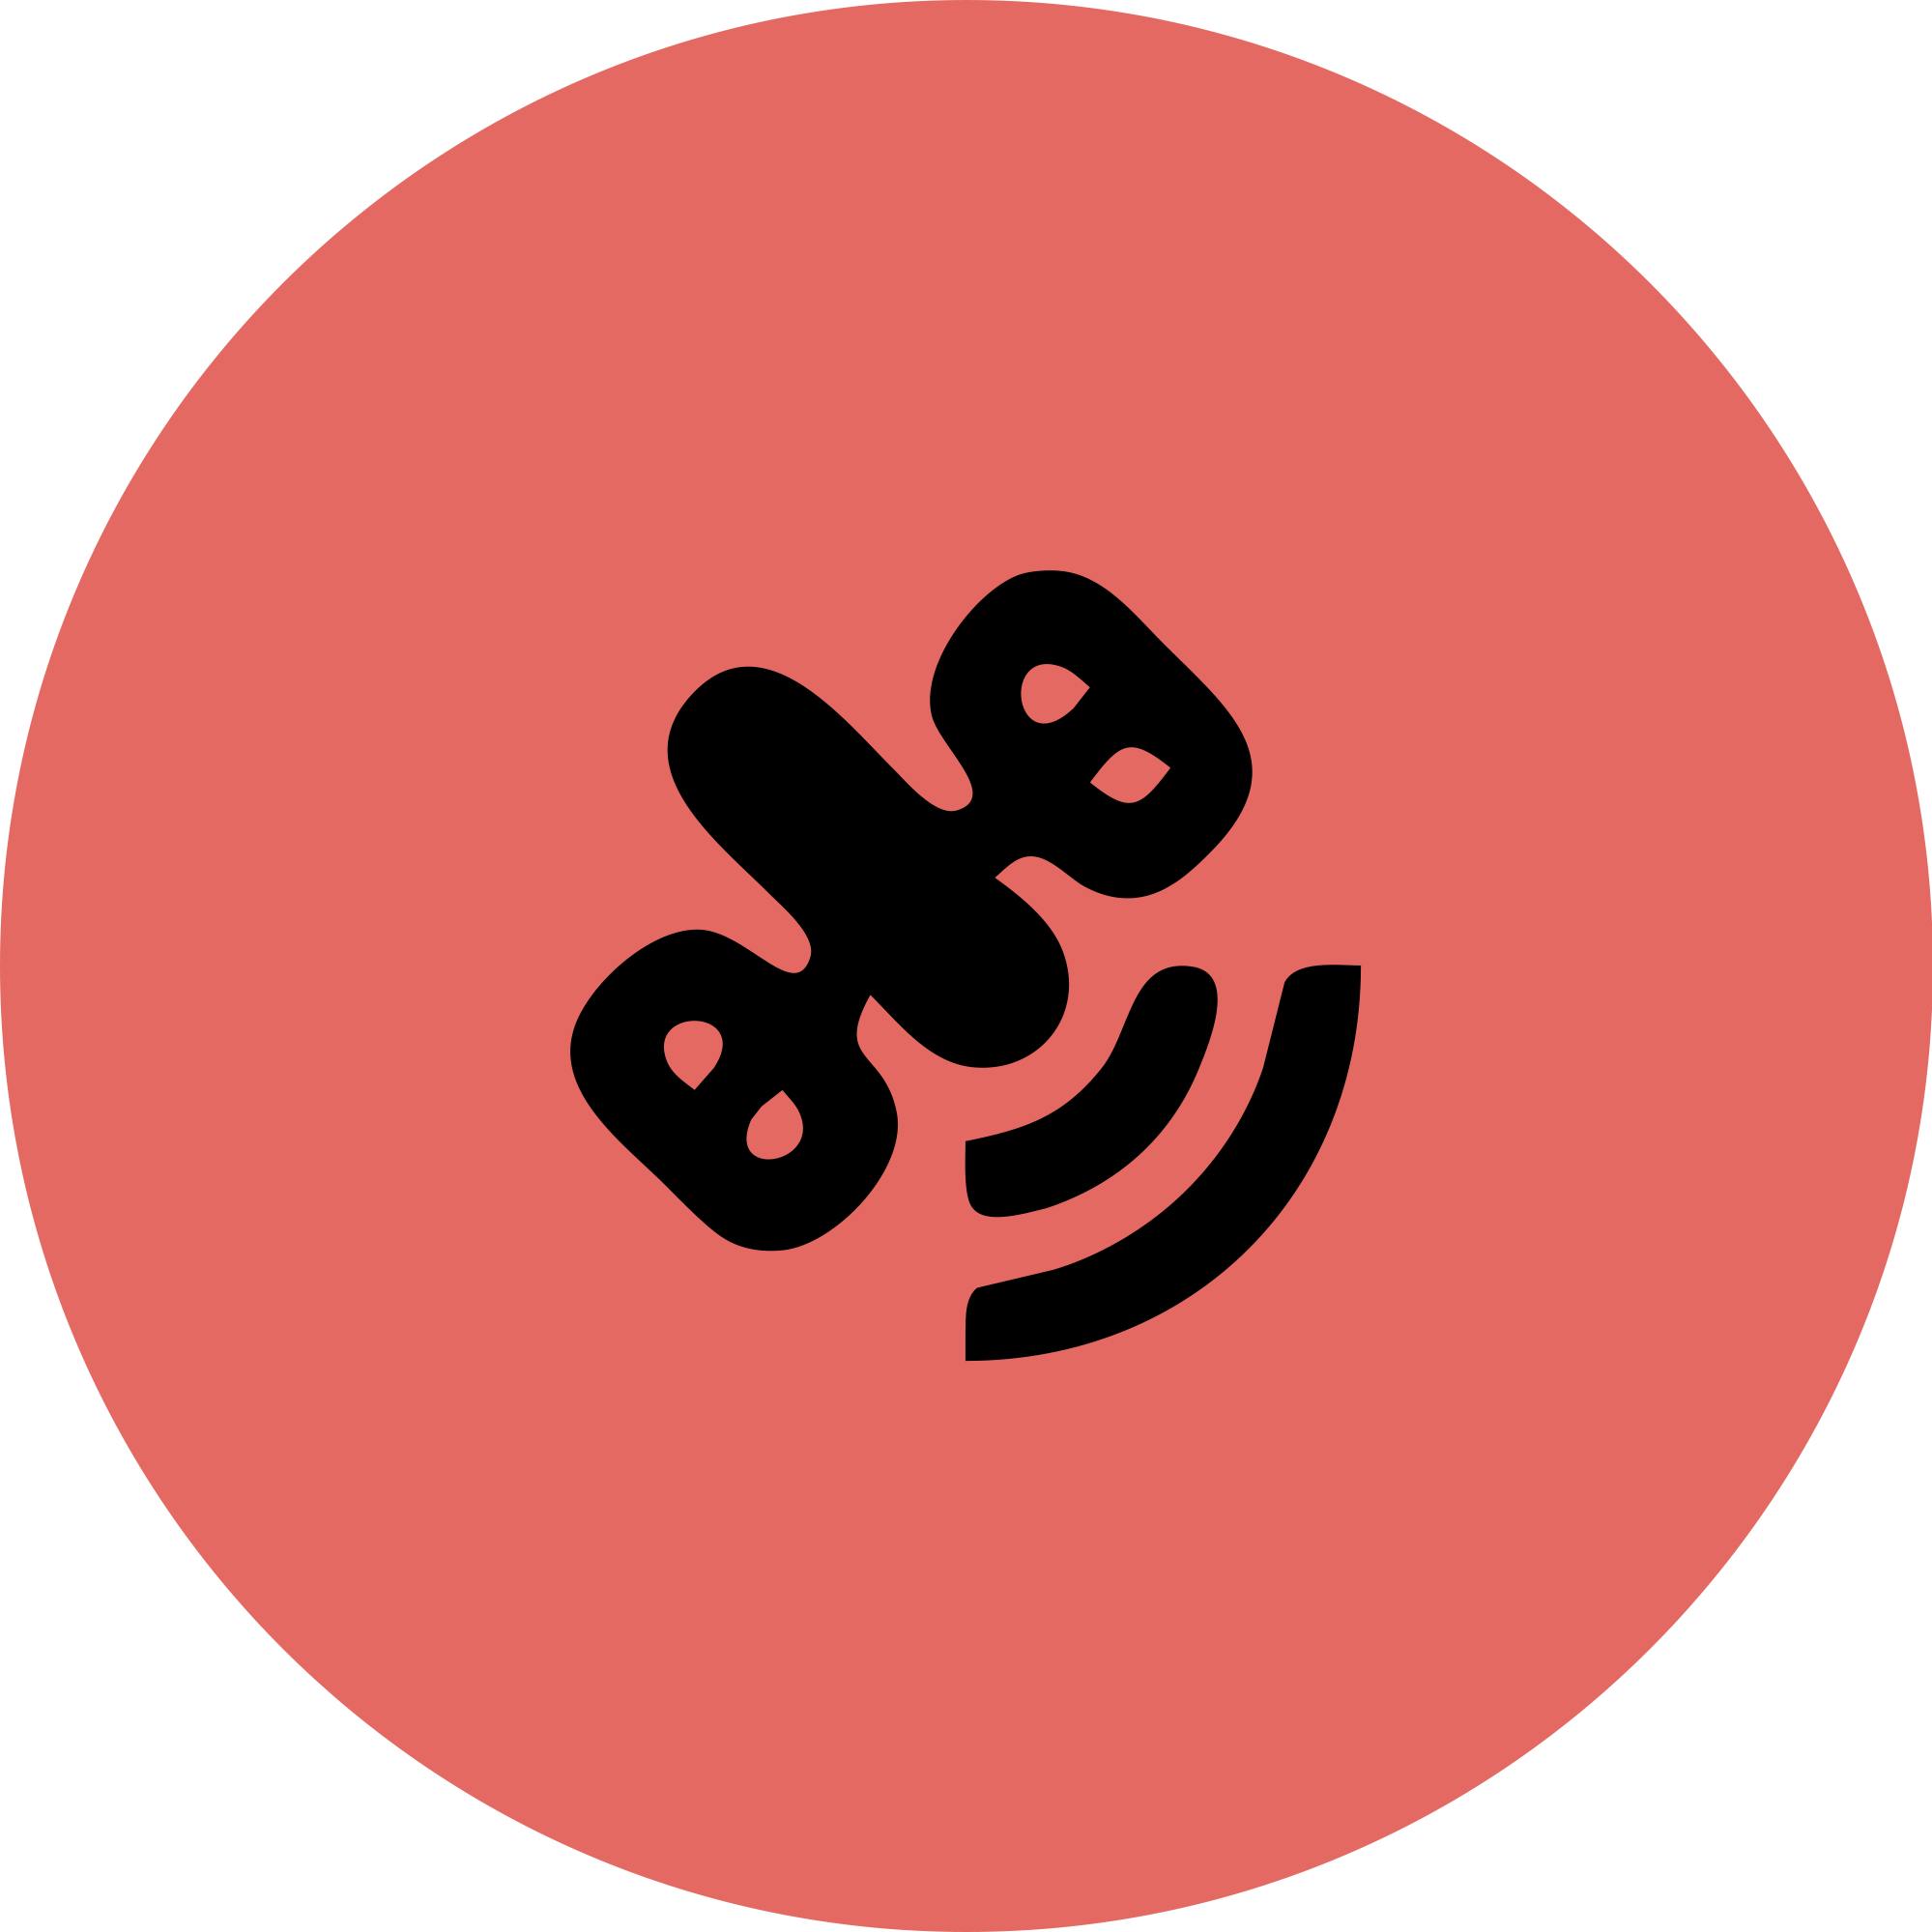 Pixel 9 Satellite Gateway app icon: Black satellite icon over a pink-red circular background